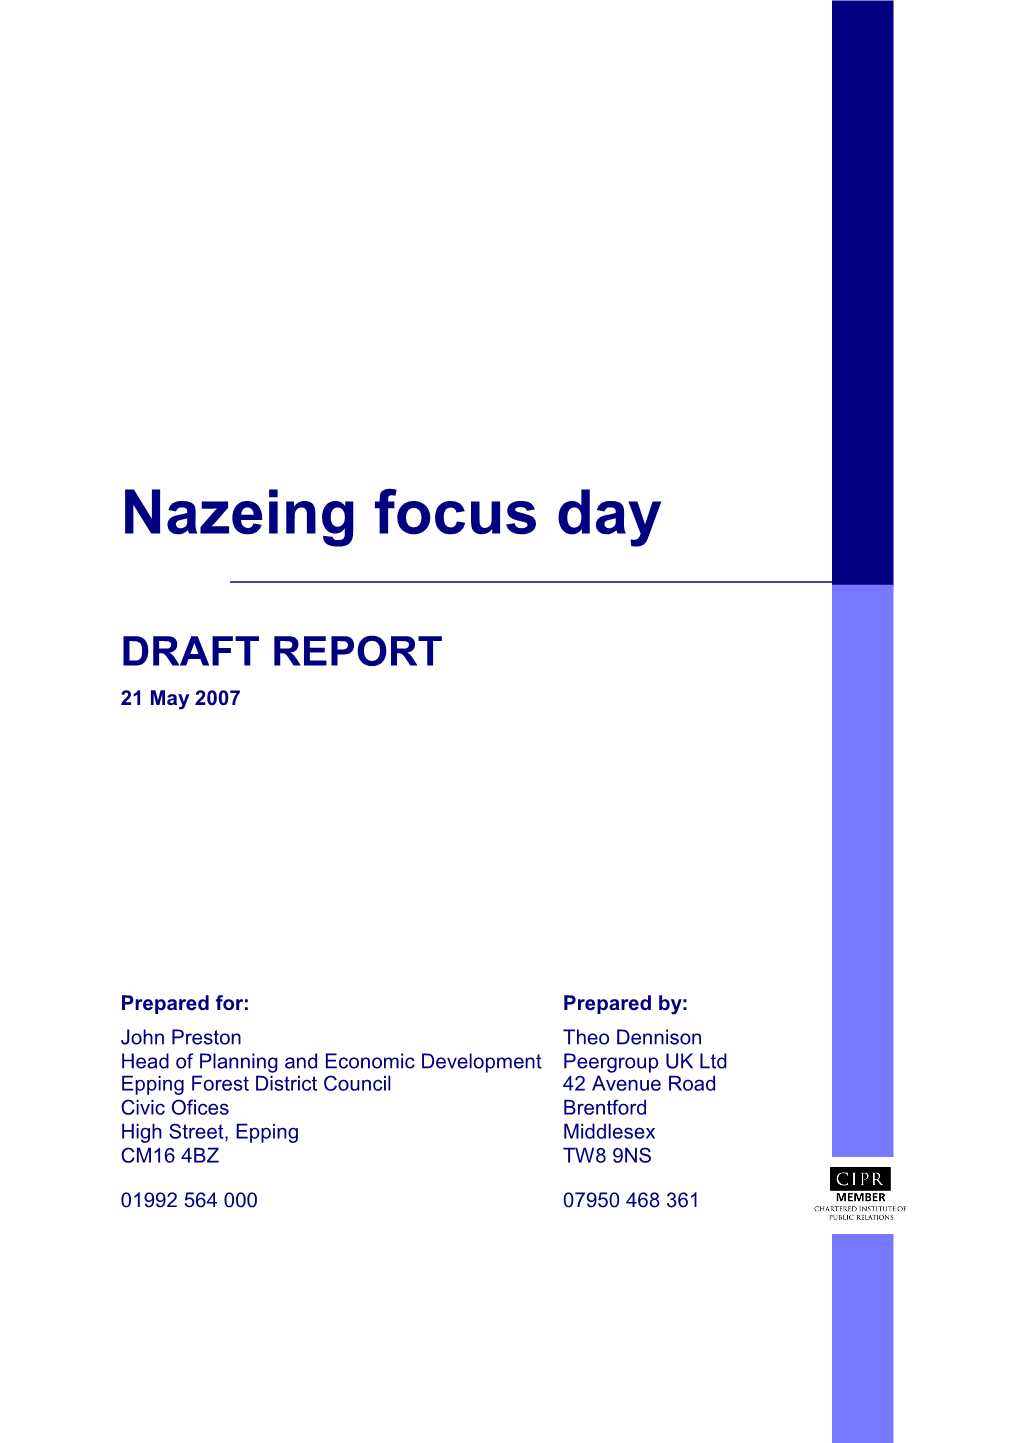 Nazeing Focus Day